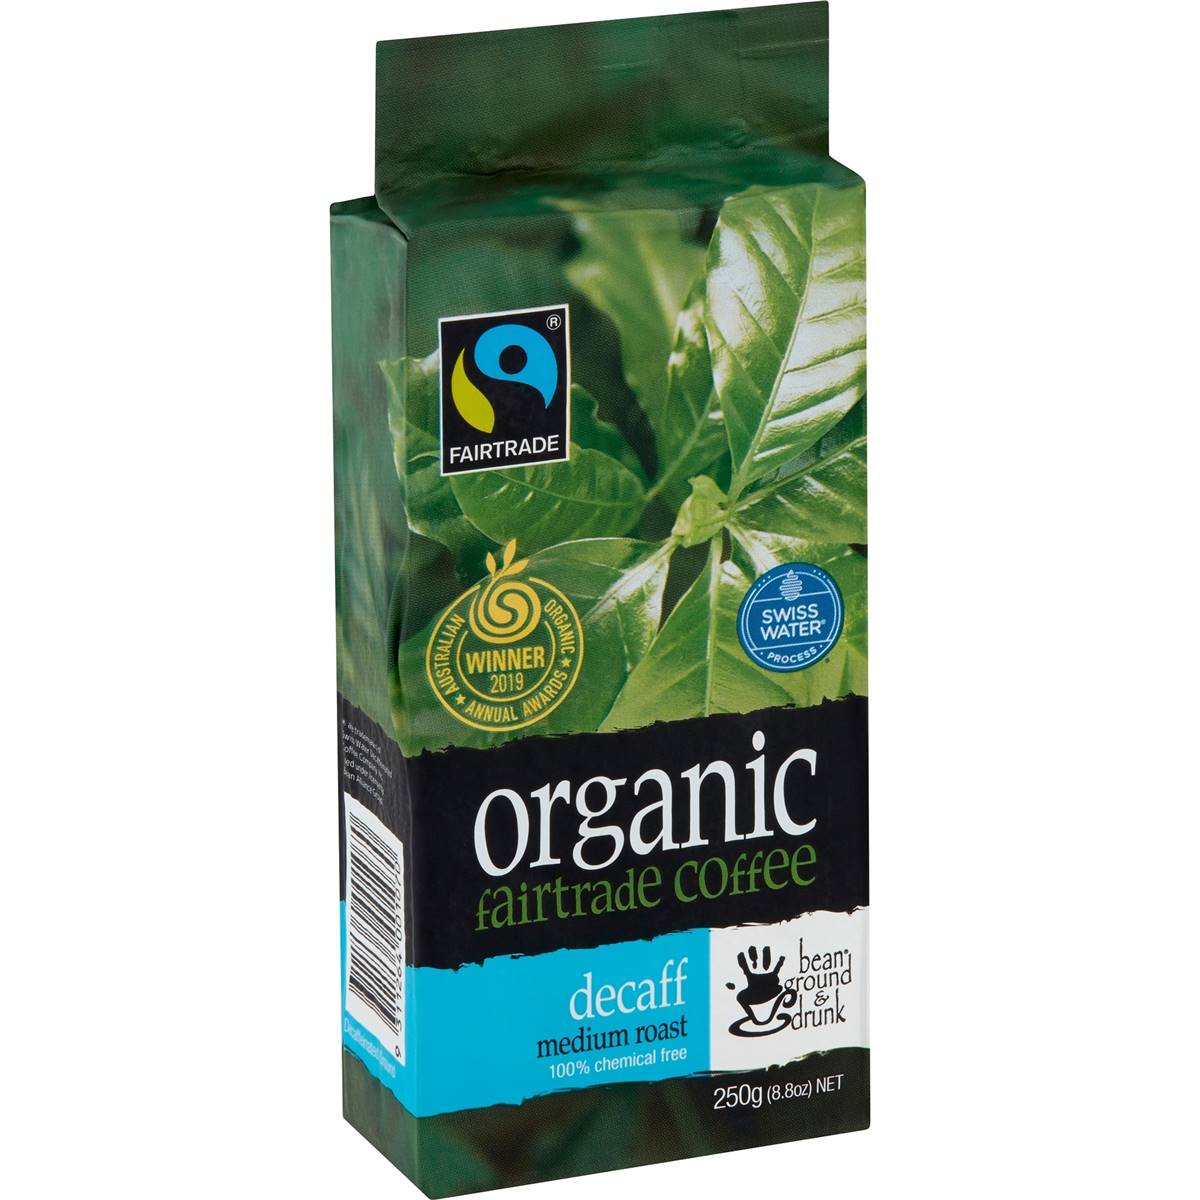 Calories in Bean Ground & Drunk Ground Coffee Organic Fairtrade Decaff